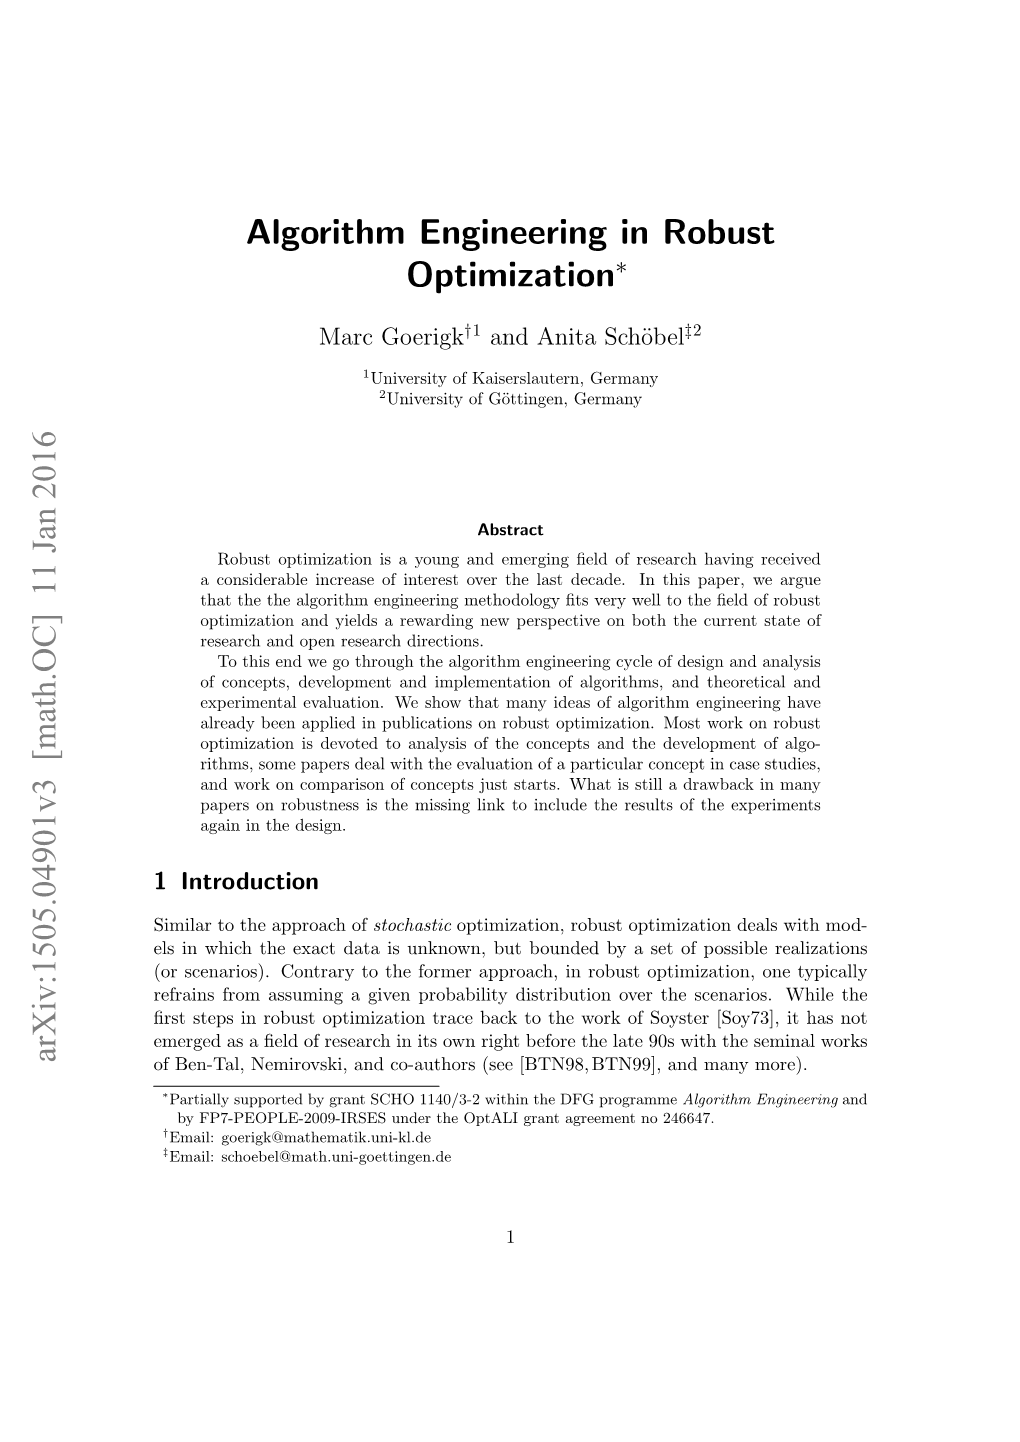 Algorithm Engineering in Robust Optimization Arxiv:1505.04901V3